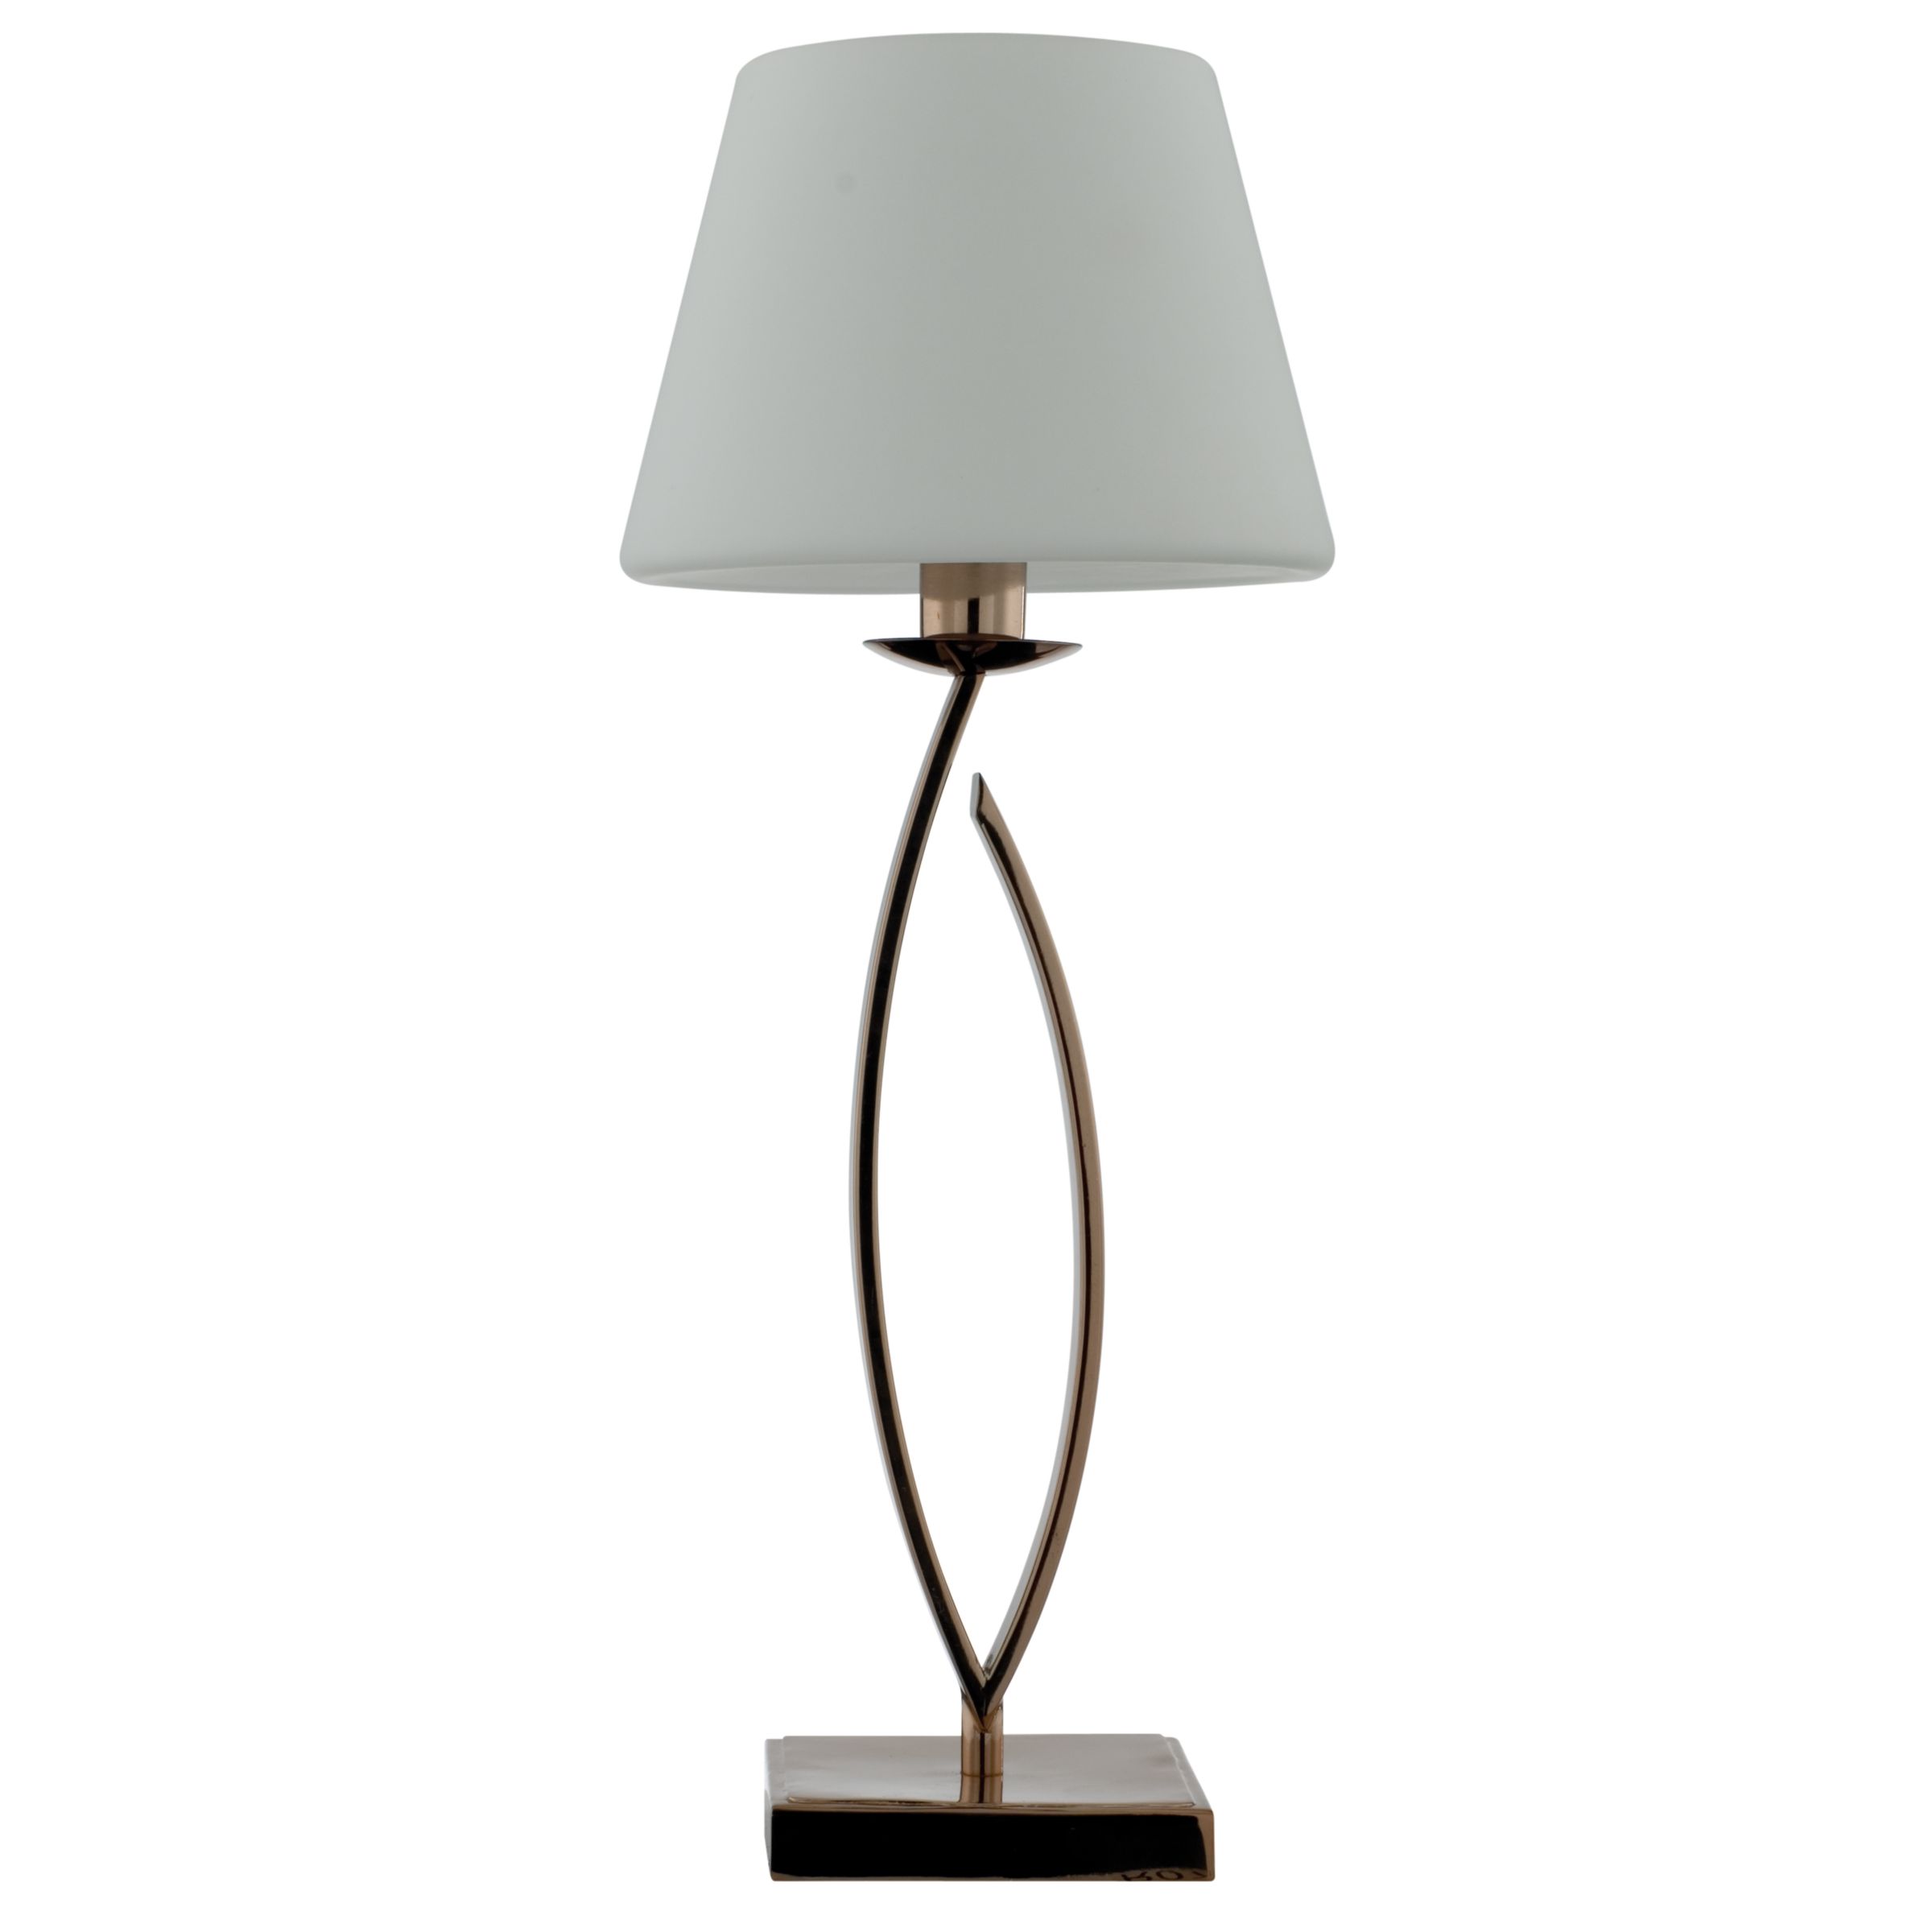 John Lewis Sevilla Table Lamp